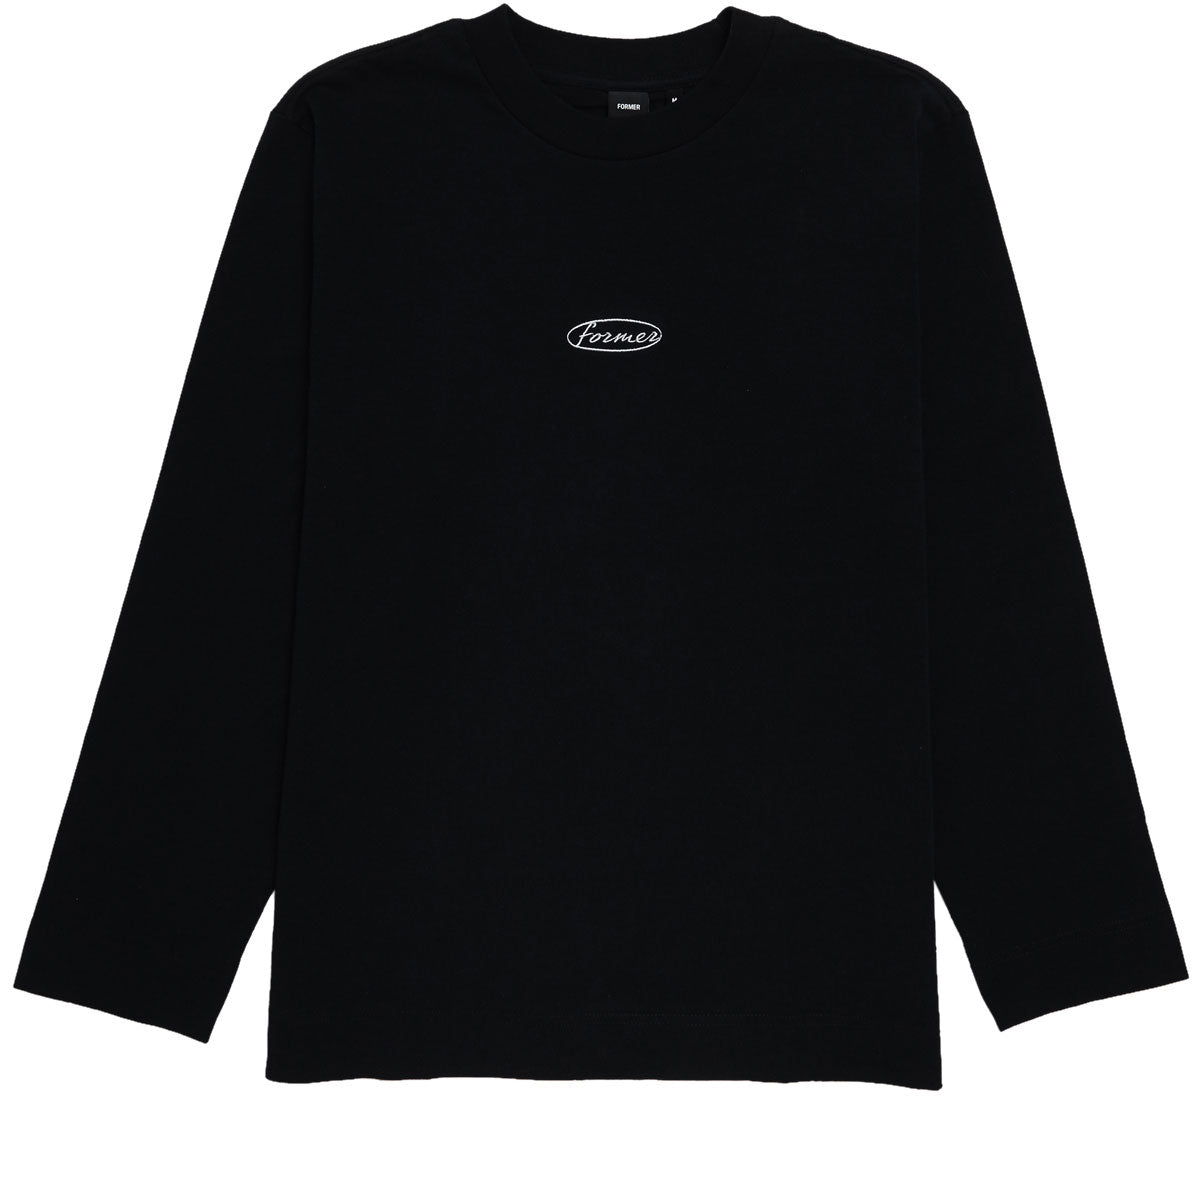 Former Faint Long Sleeve T-Shirt - Black image 1